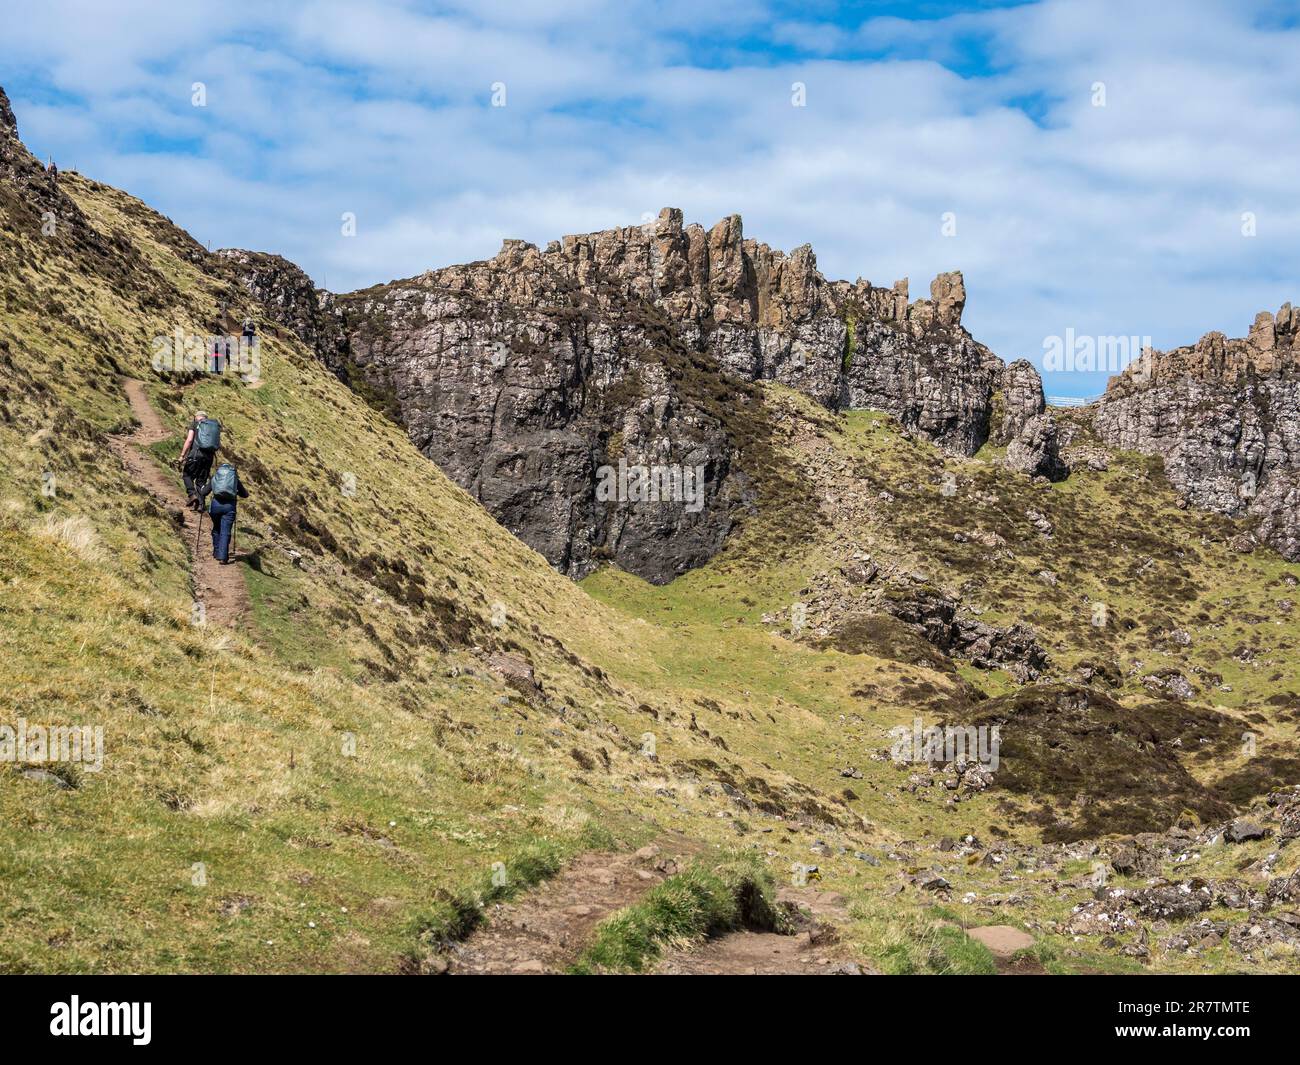 Hikers at the Quiraing rock formations, Trotternish peninsula, Isle of Skye, Scotland, UK Stock Photo